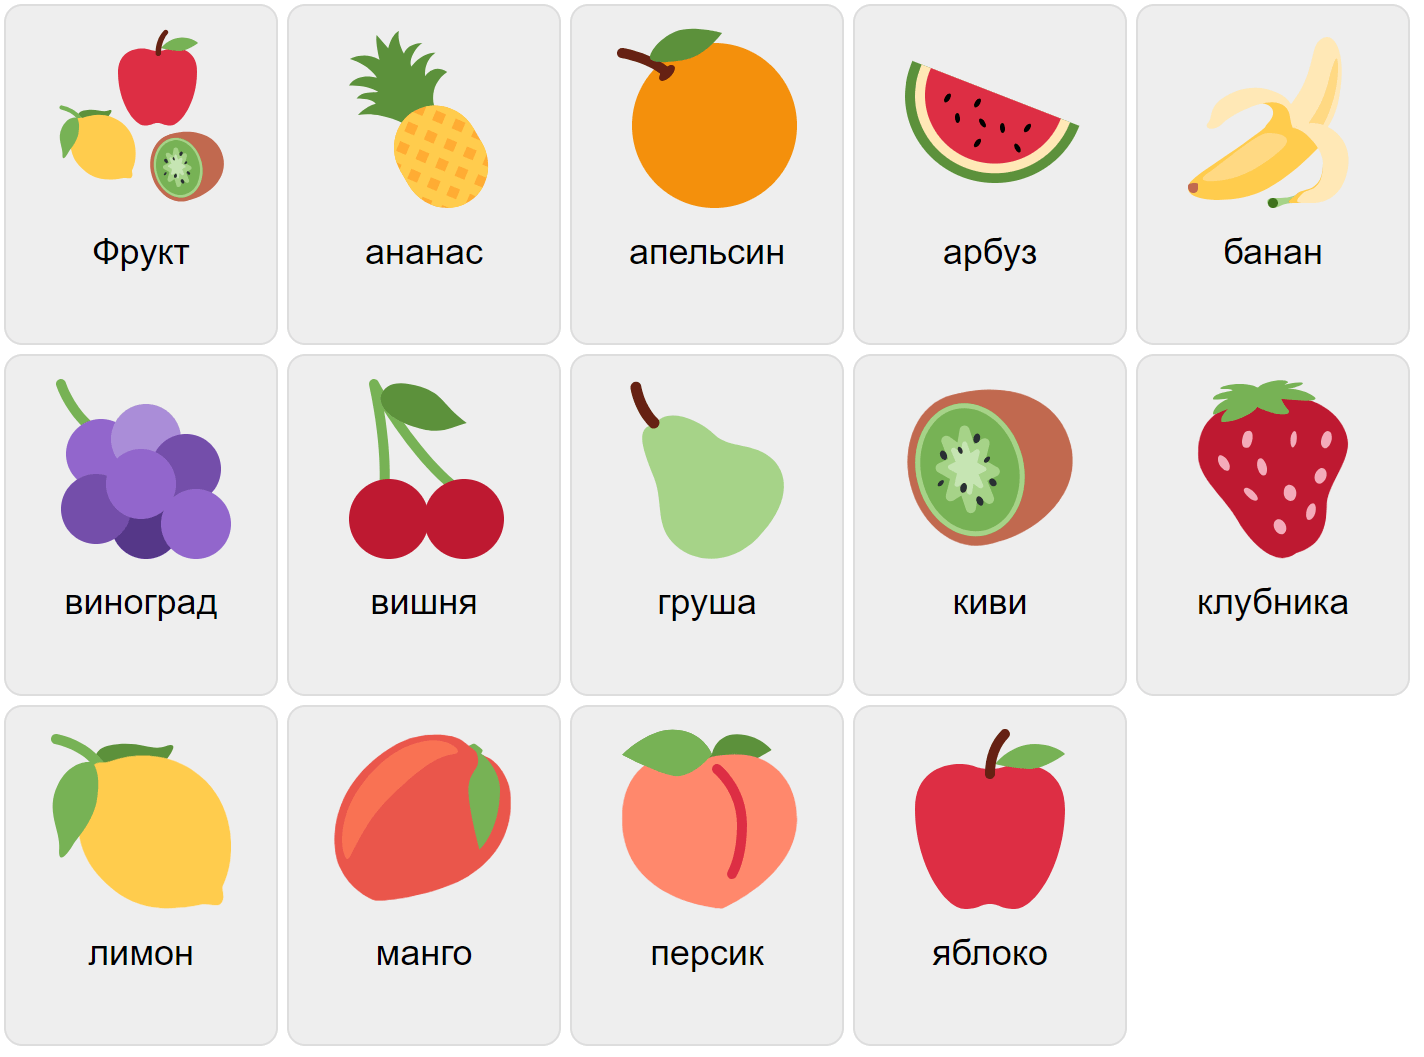 Fruits in Russian